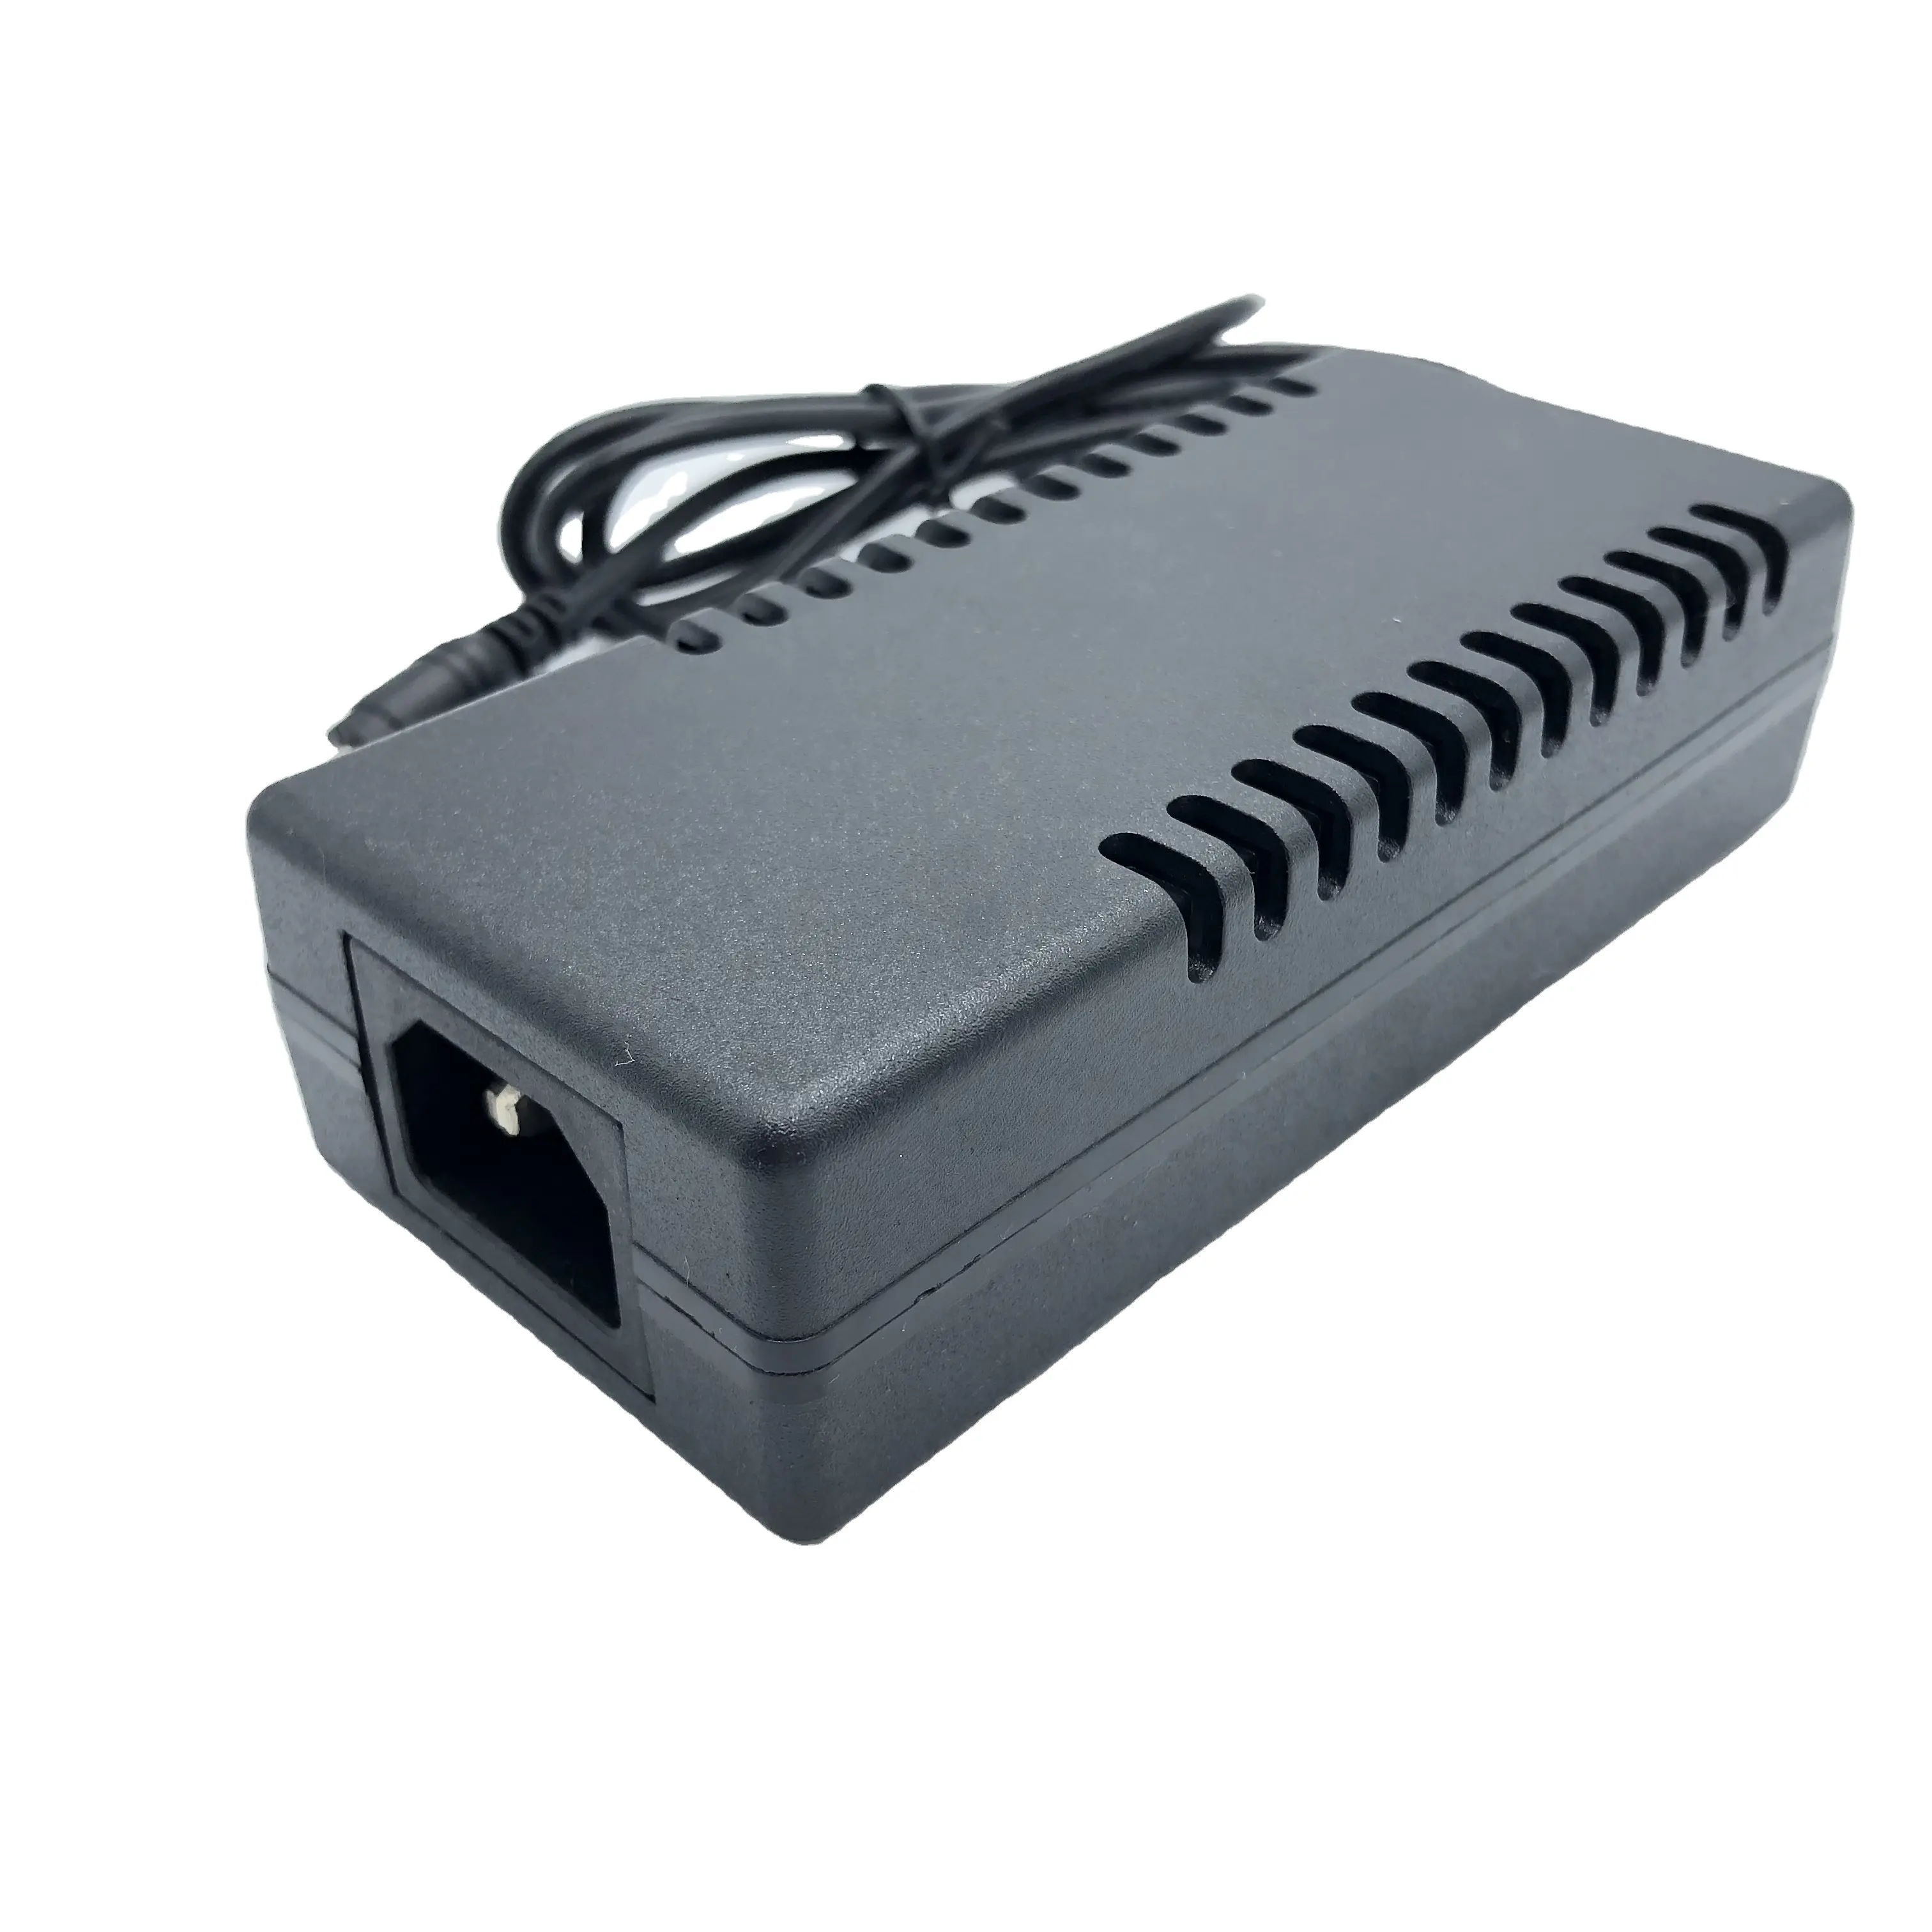 Fabrika fiyat güç adaptörü 5V 9V 12V 15V 24V 1A 2A 3A 4A 5A 6A 7A 8A 9A 10A AC/DC güç kaynağı adaptörü LED LCD CCTV için